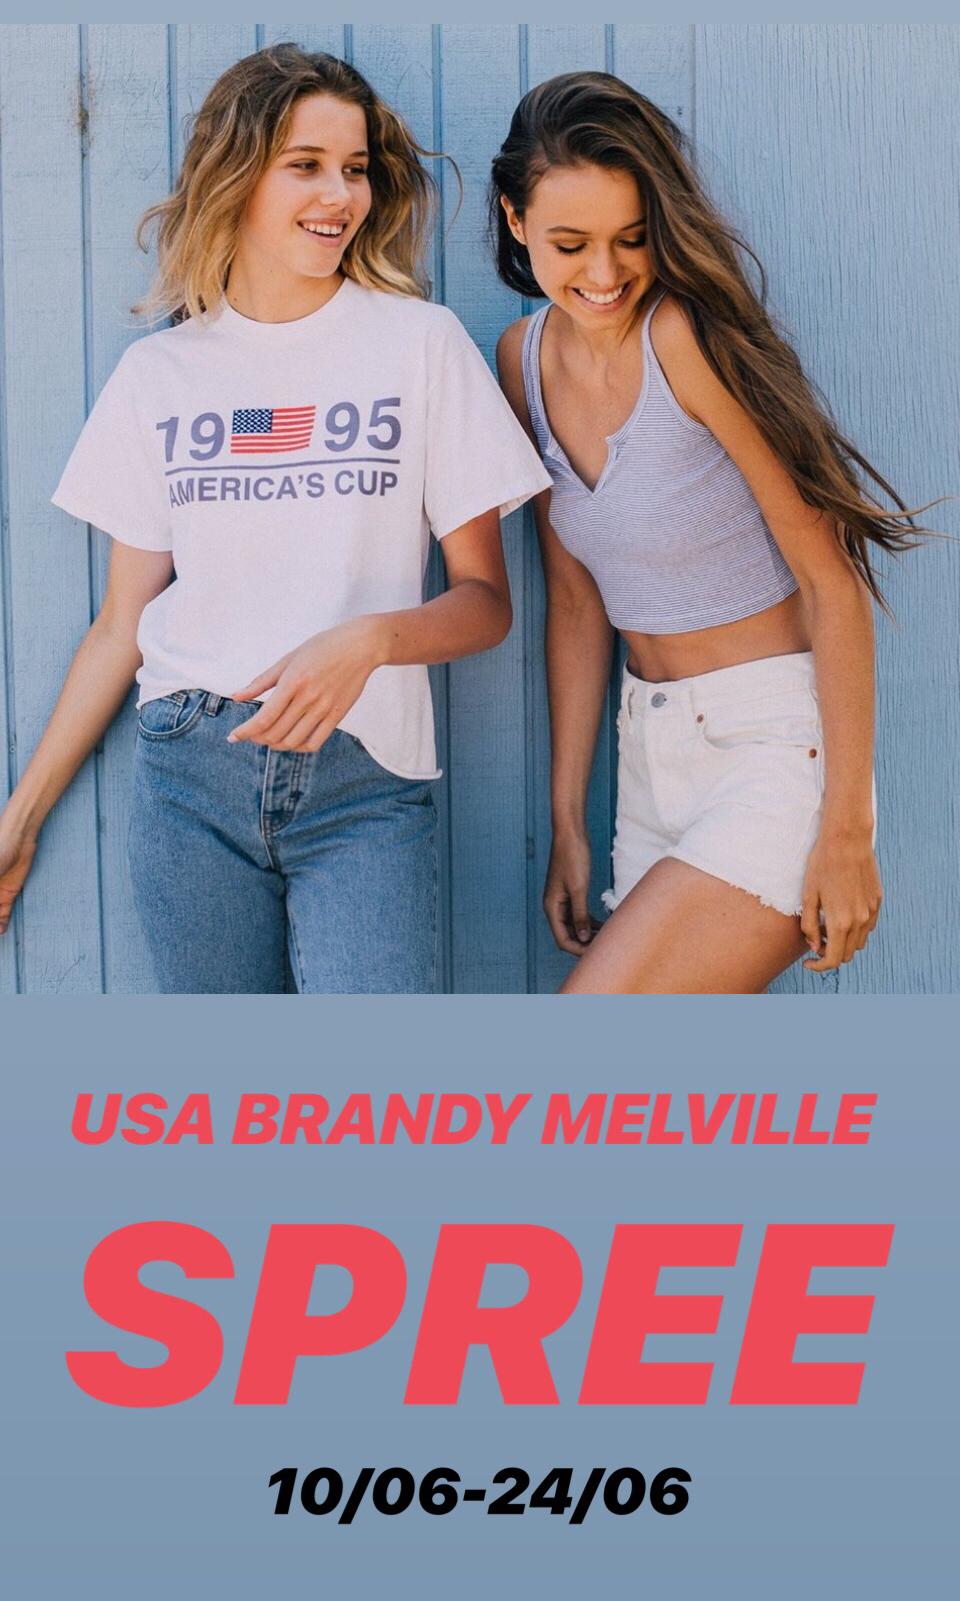 Brandy Melville USA